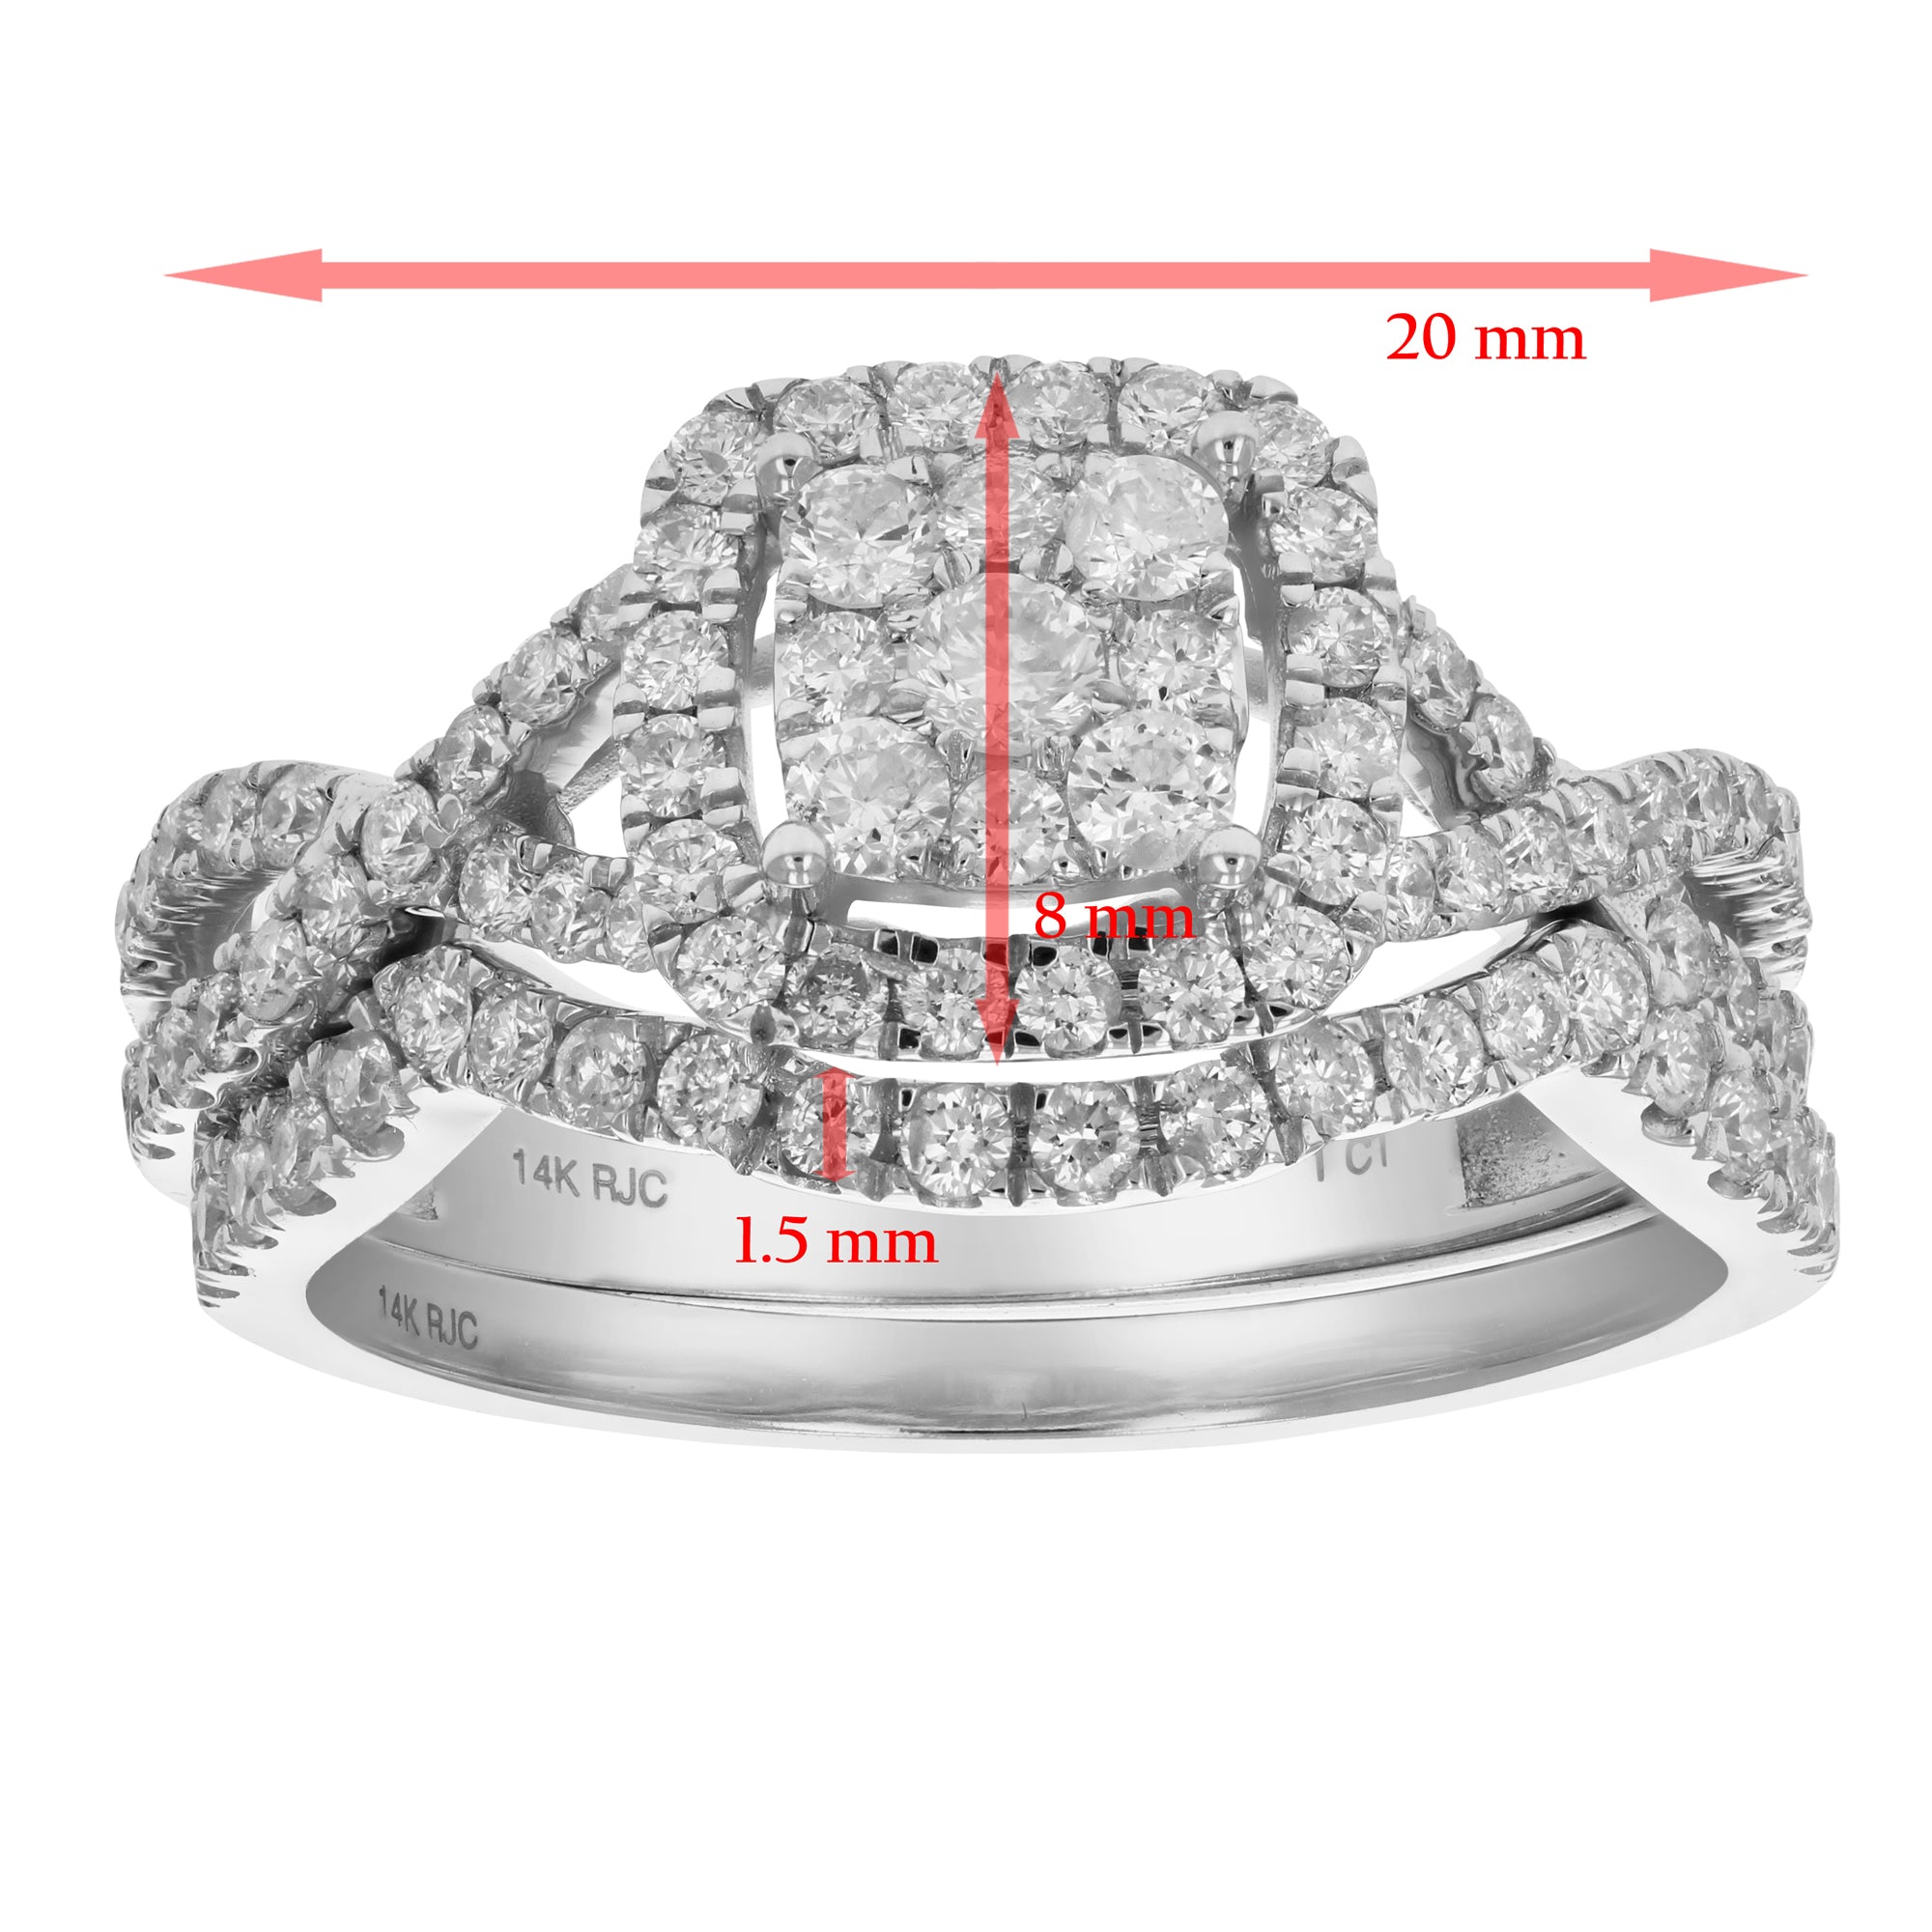 1 cttw Diamond Wedding Engagement Ring Set 14K White Gold Composite Bridal